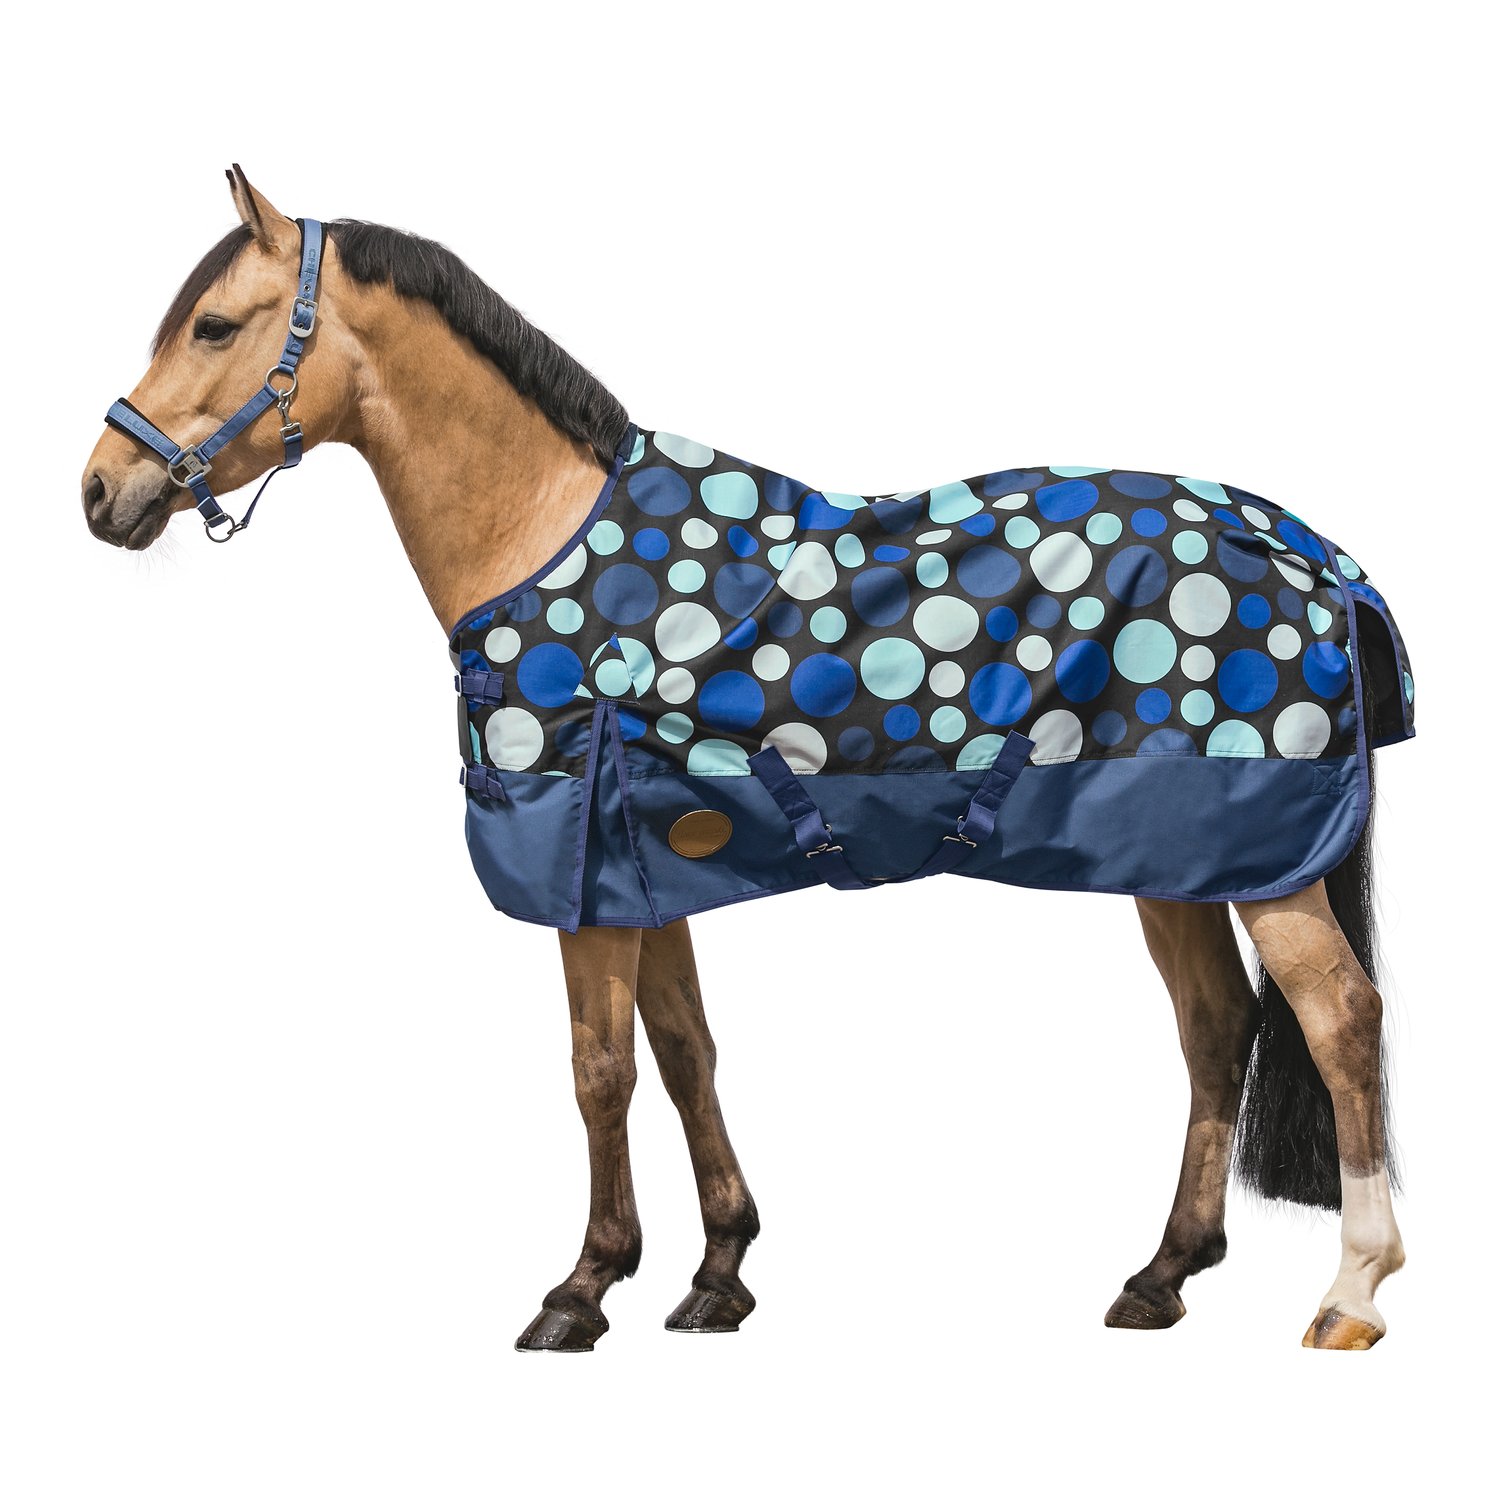 Horse-friends Outdoordecke Pony blue dots | 105 cm